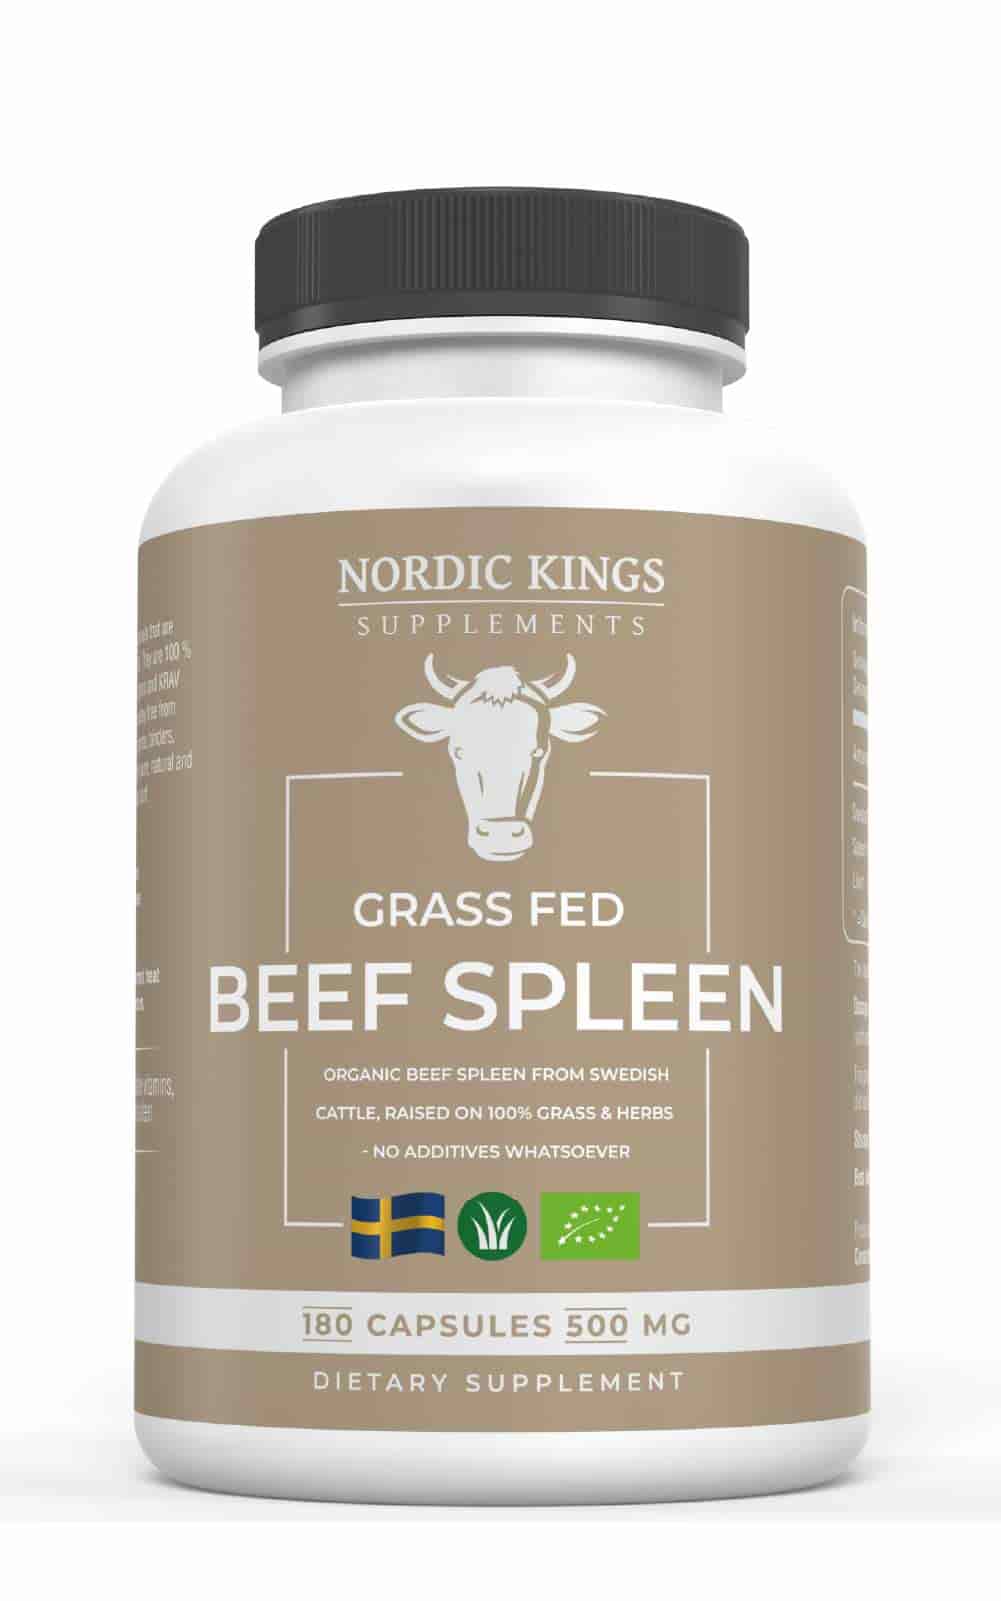 Buy Nordic Kings Organic Grass Fed Beef Spleen at LiveHelfi